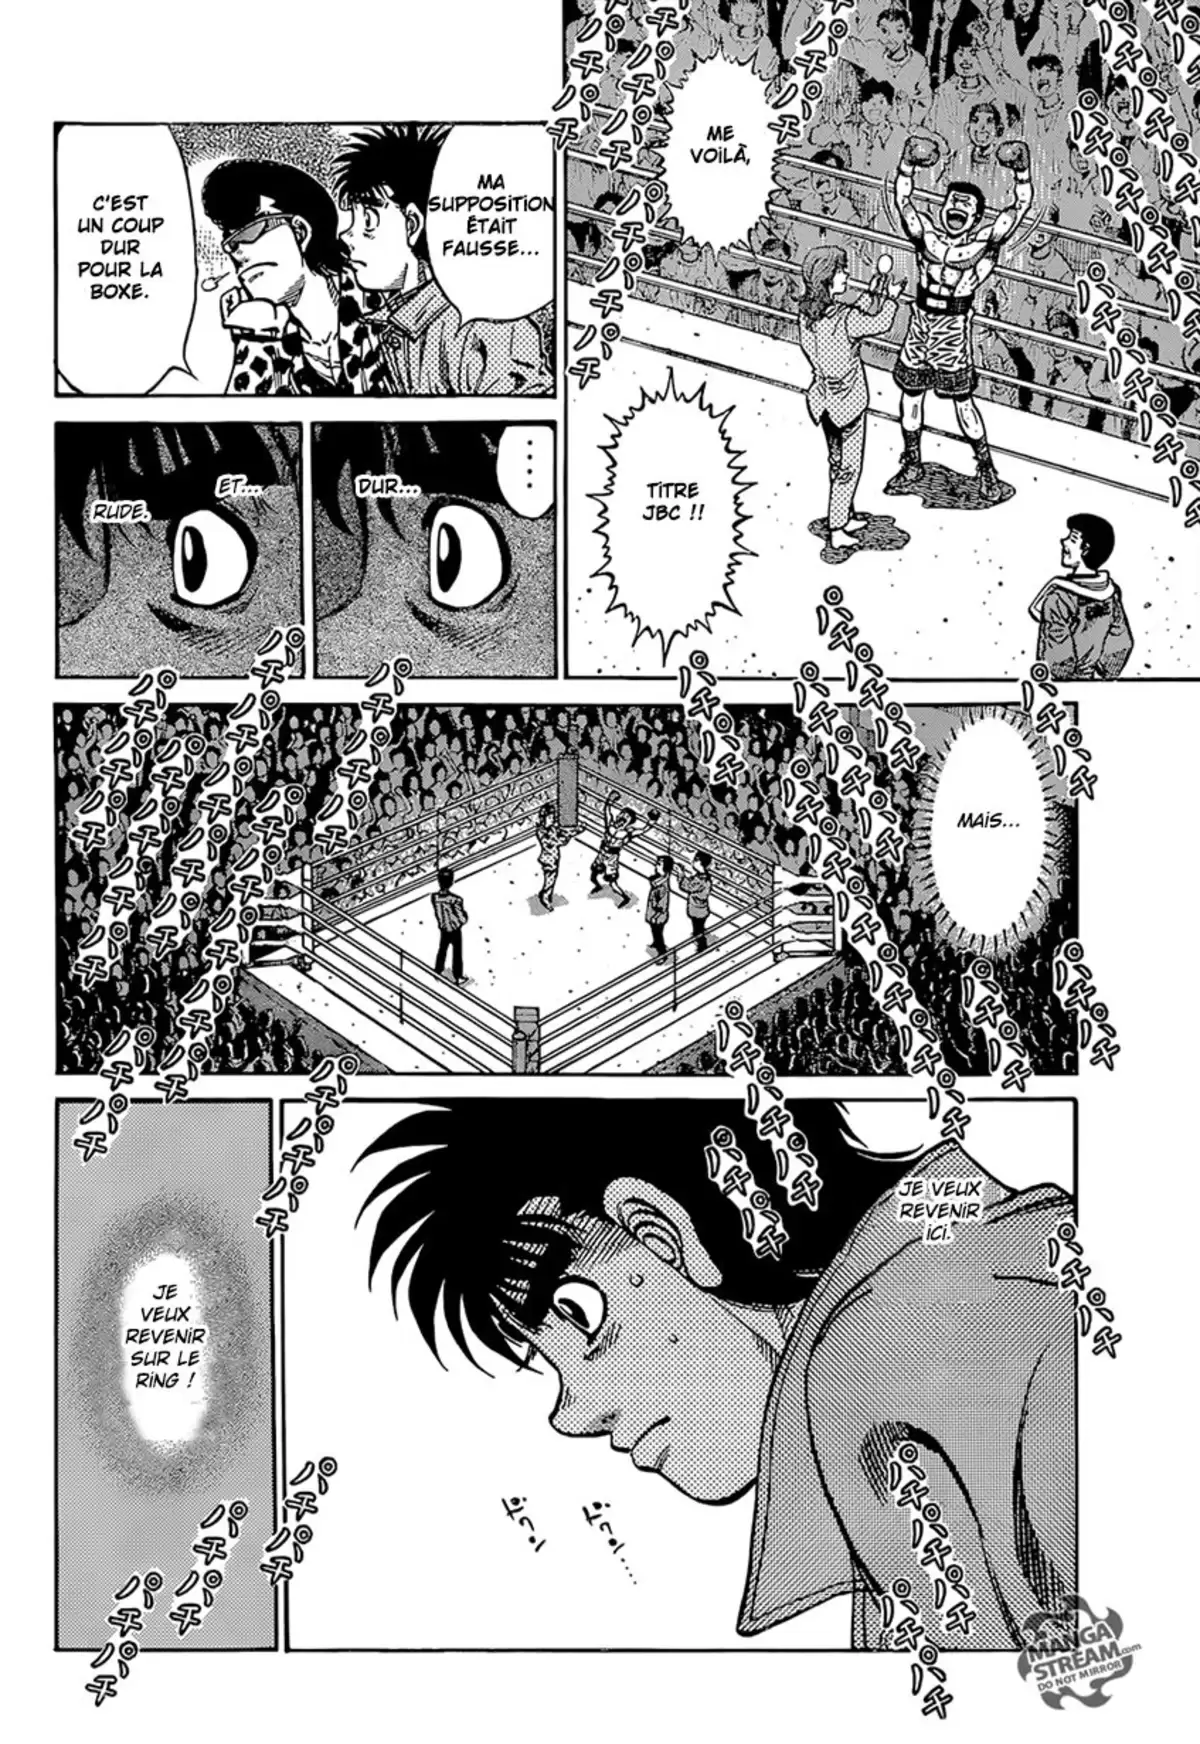 Hajime no Ippo Volume 118 page 3